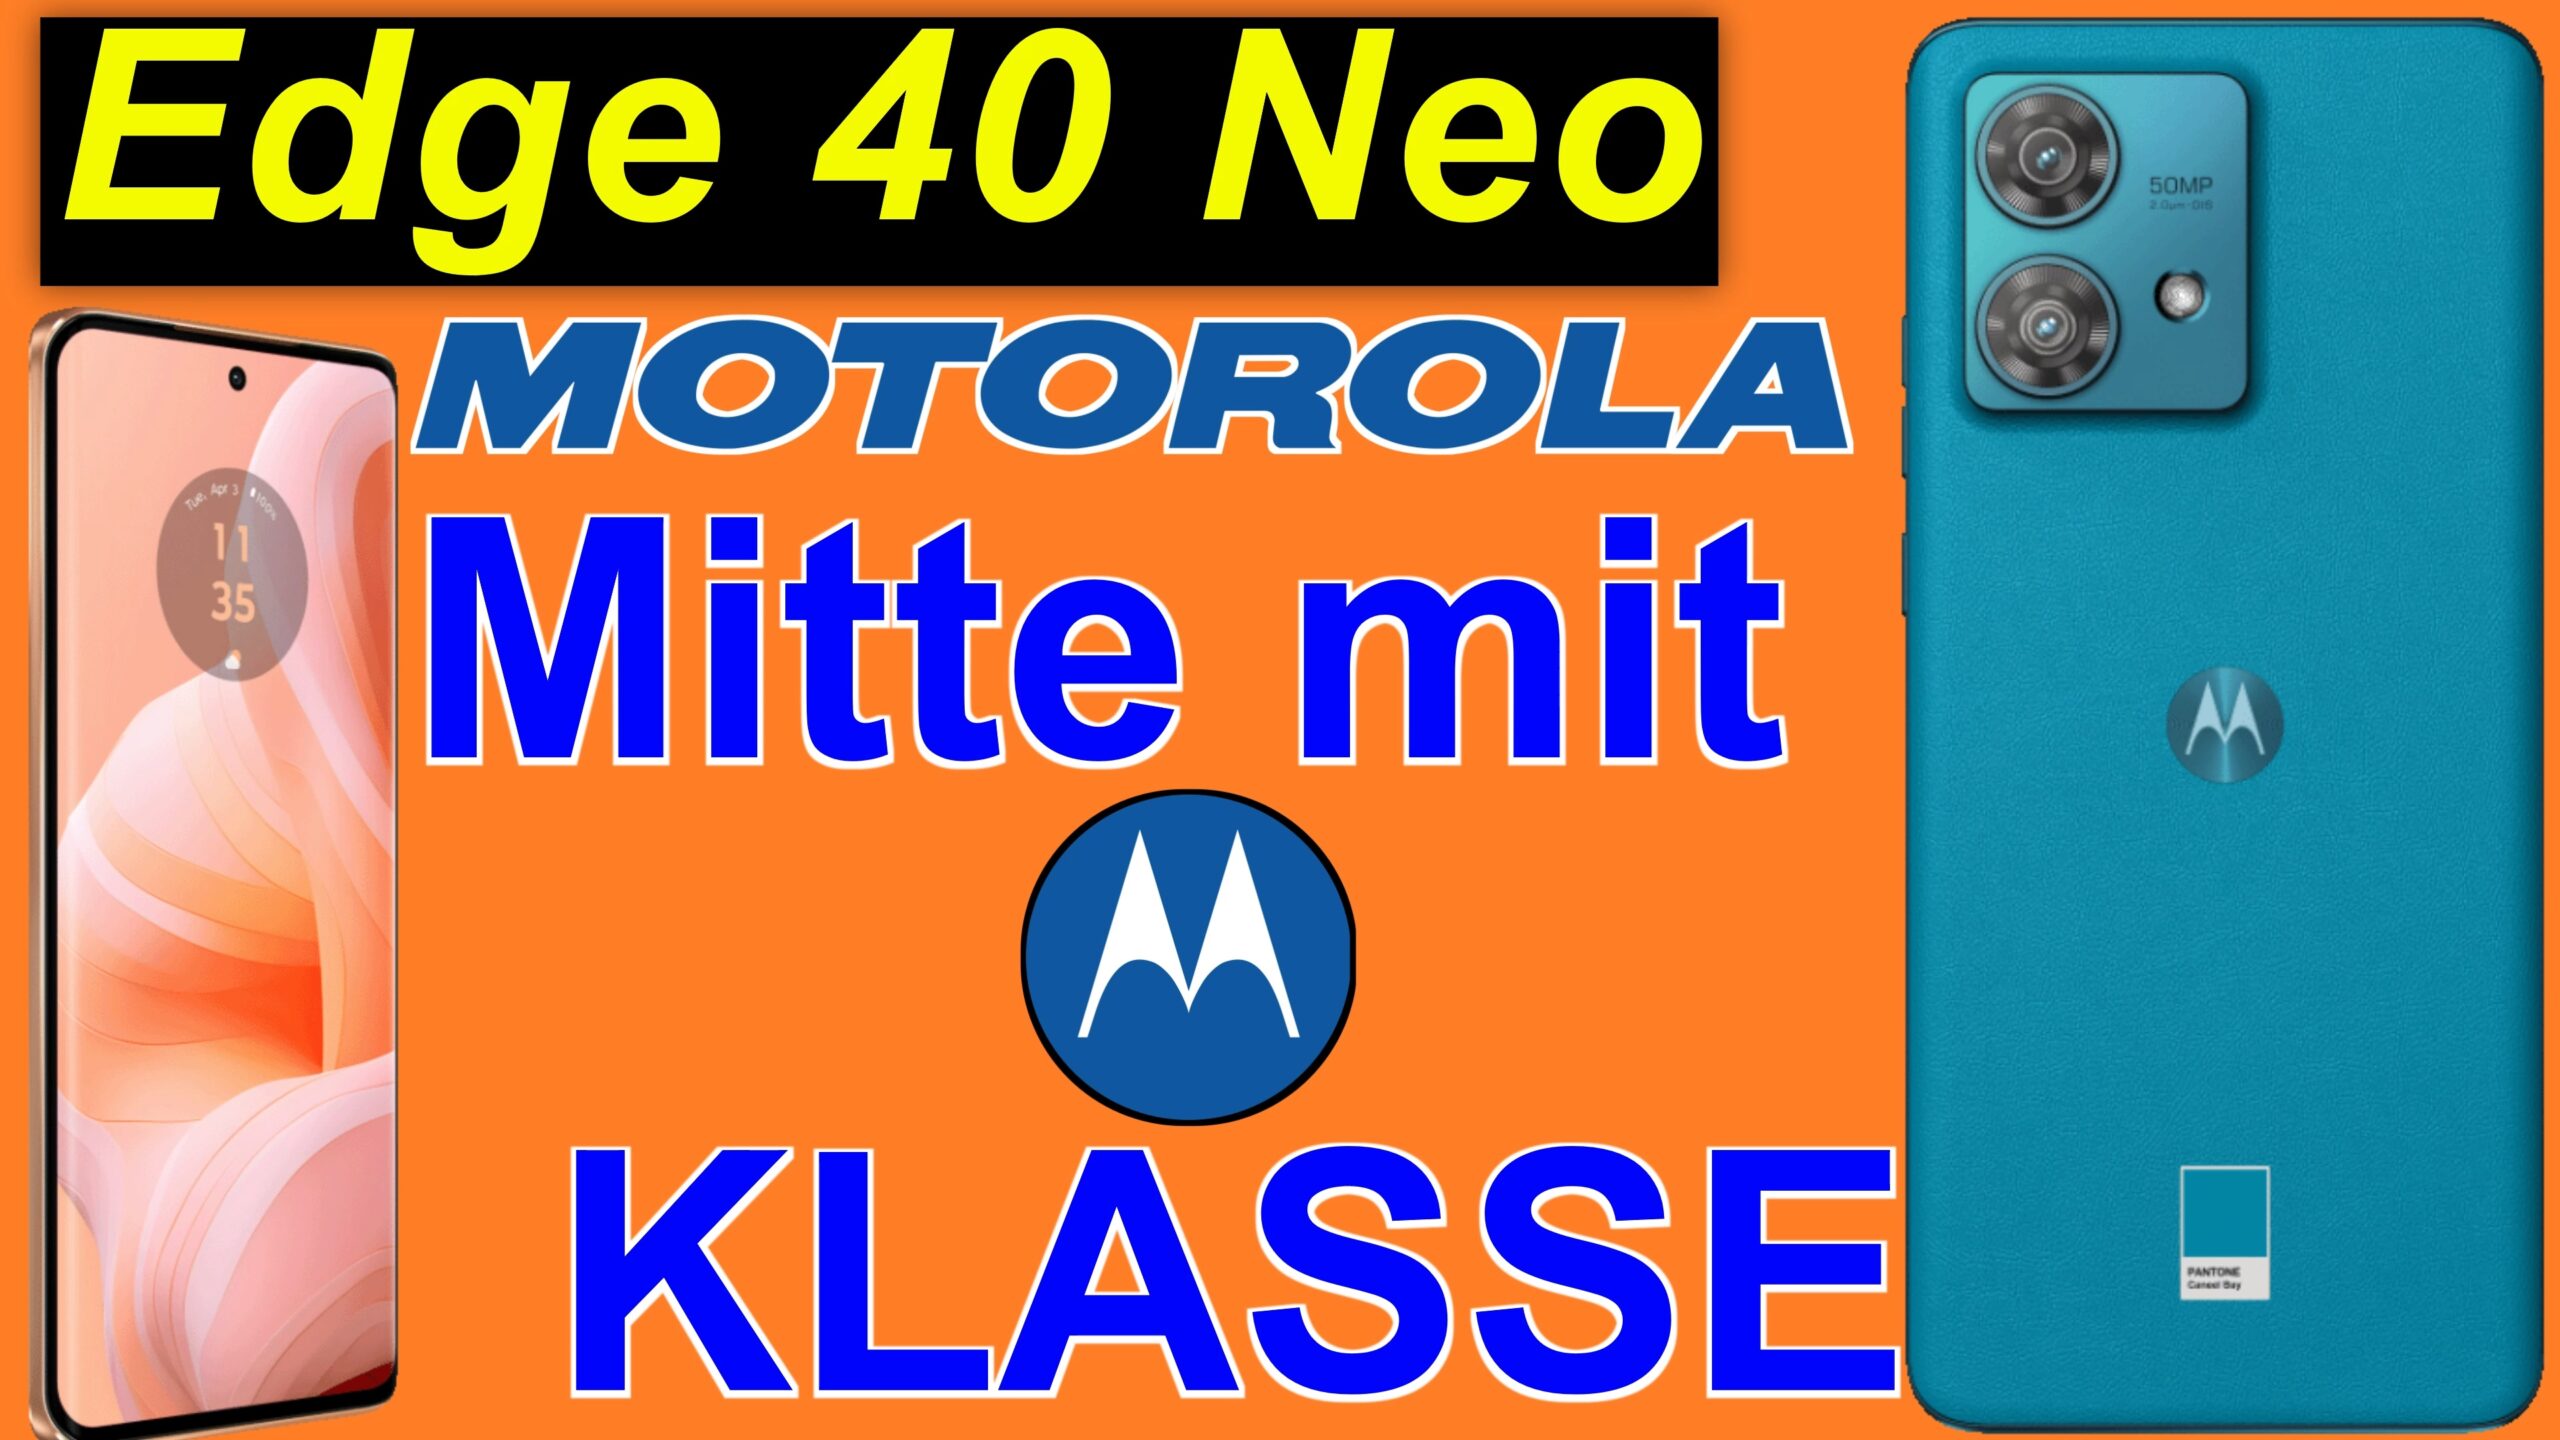 Motorola Edge 40 Neo - prächtige Mitte